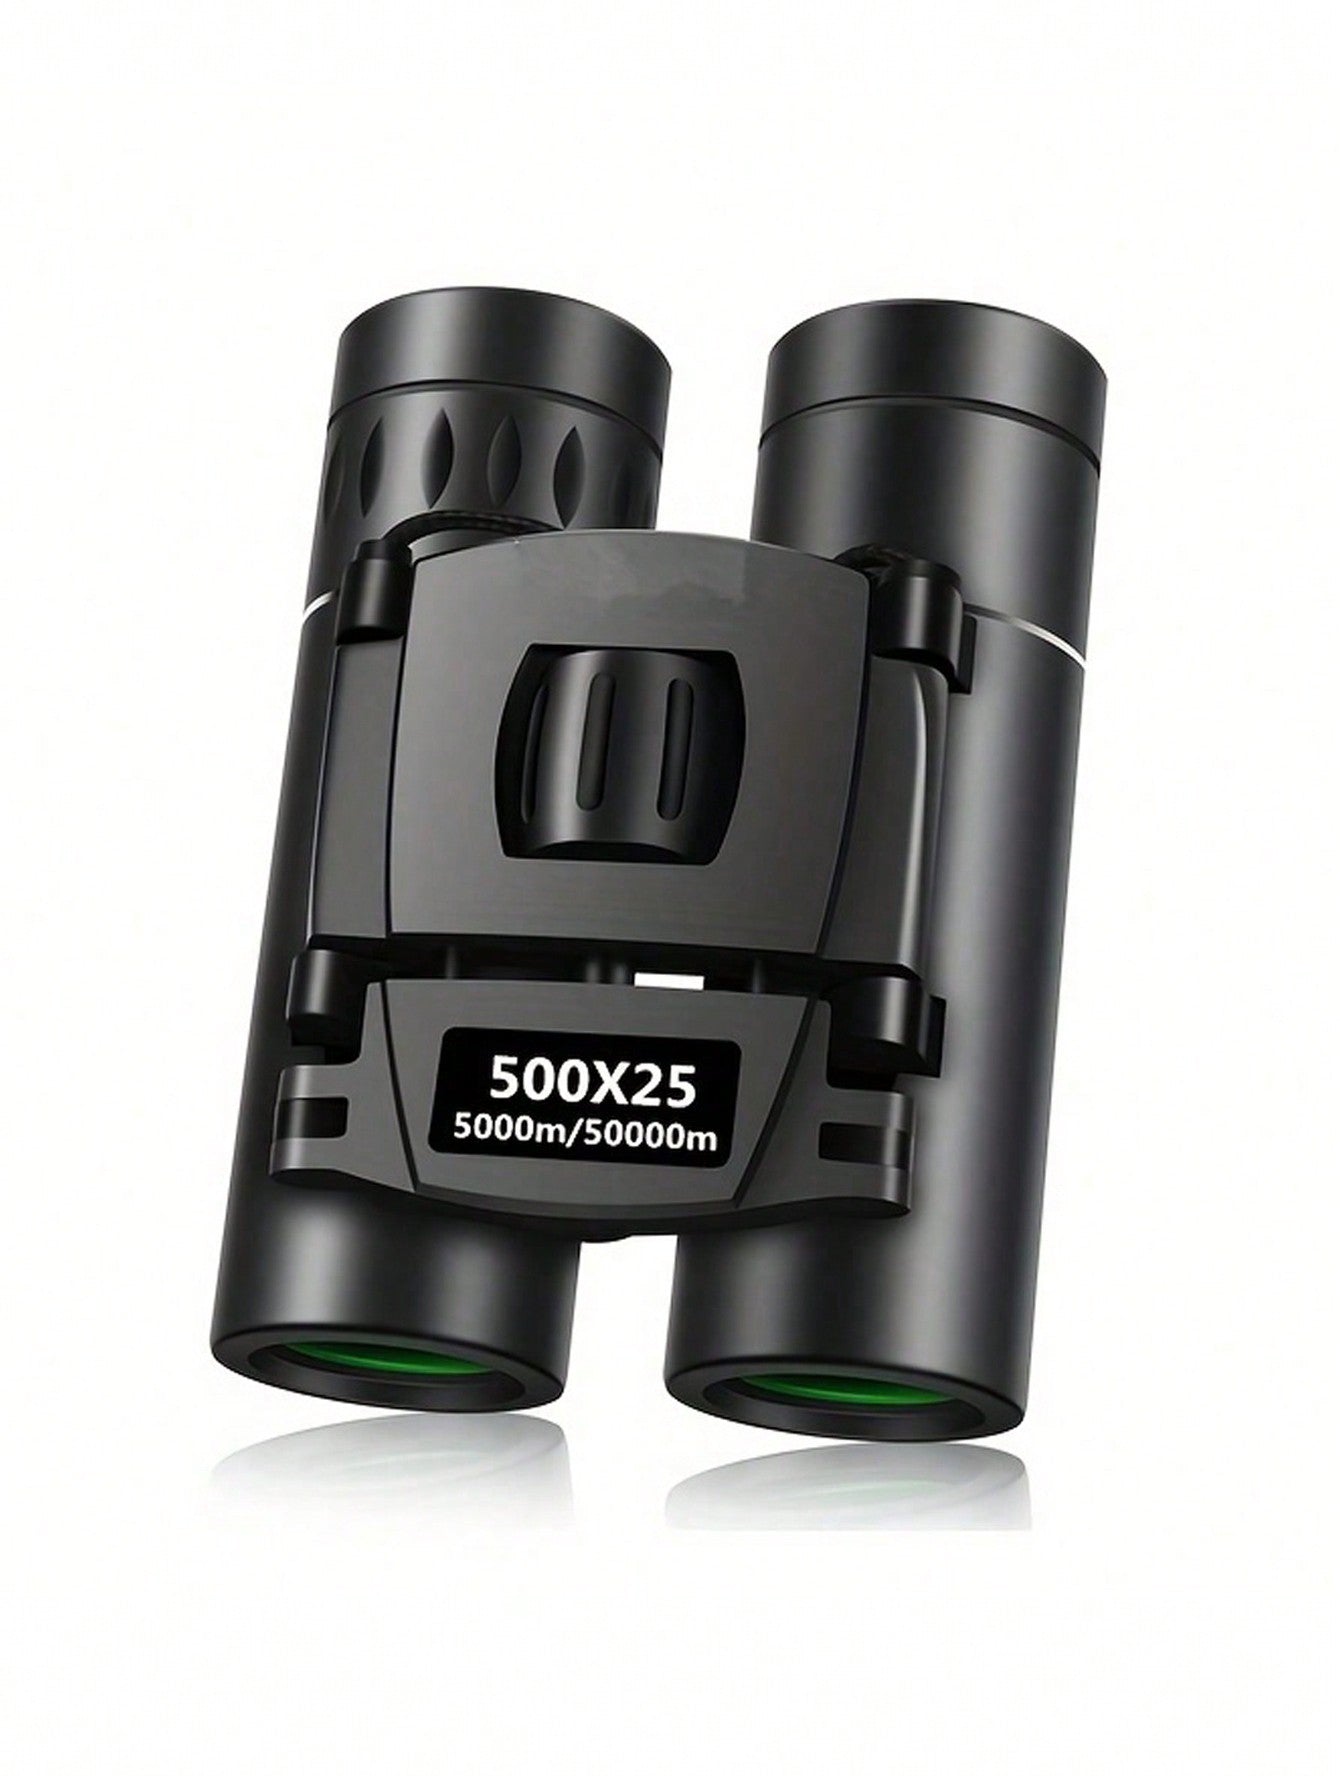 500x25 High Definition Folding Mini Telescope Binoculars, Bak4 Optical System 💜